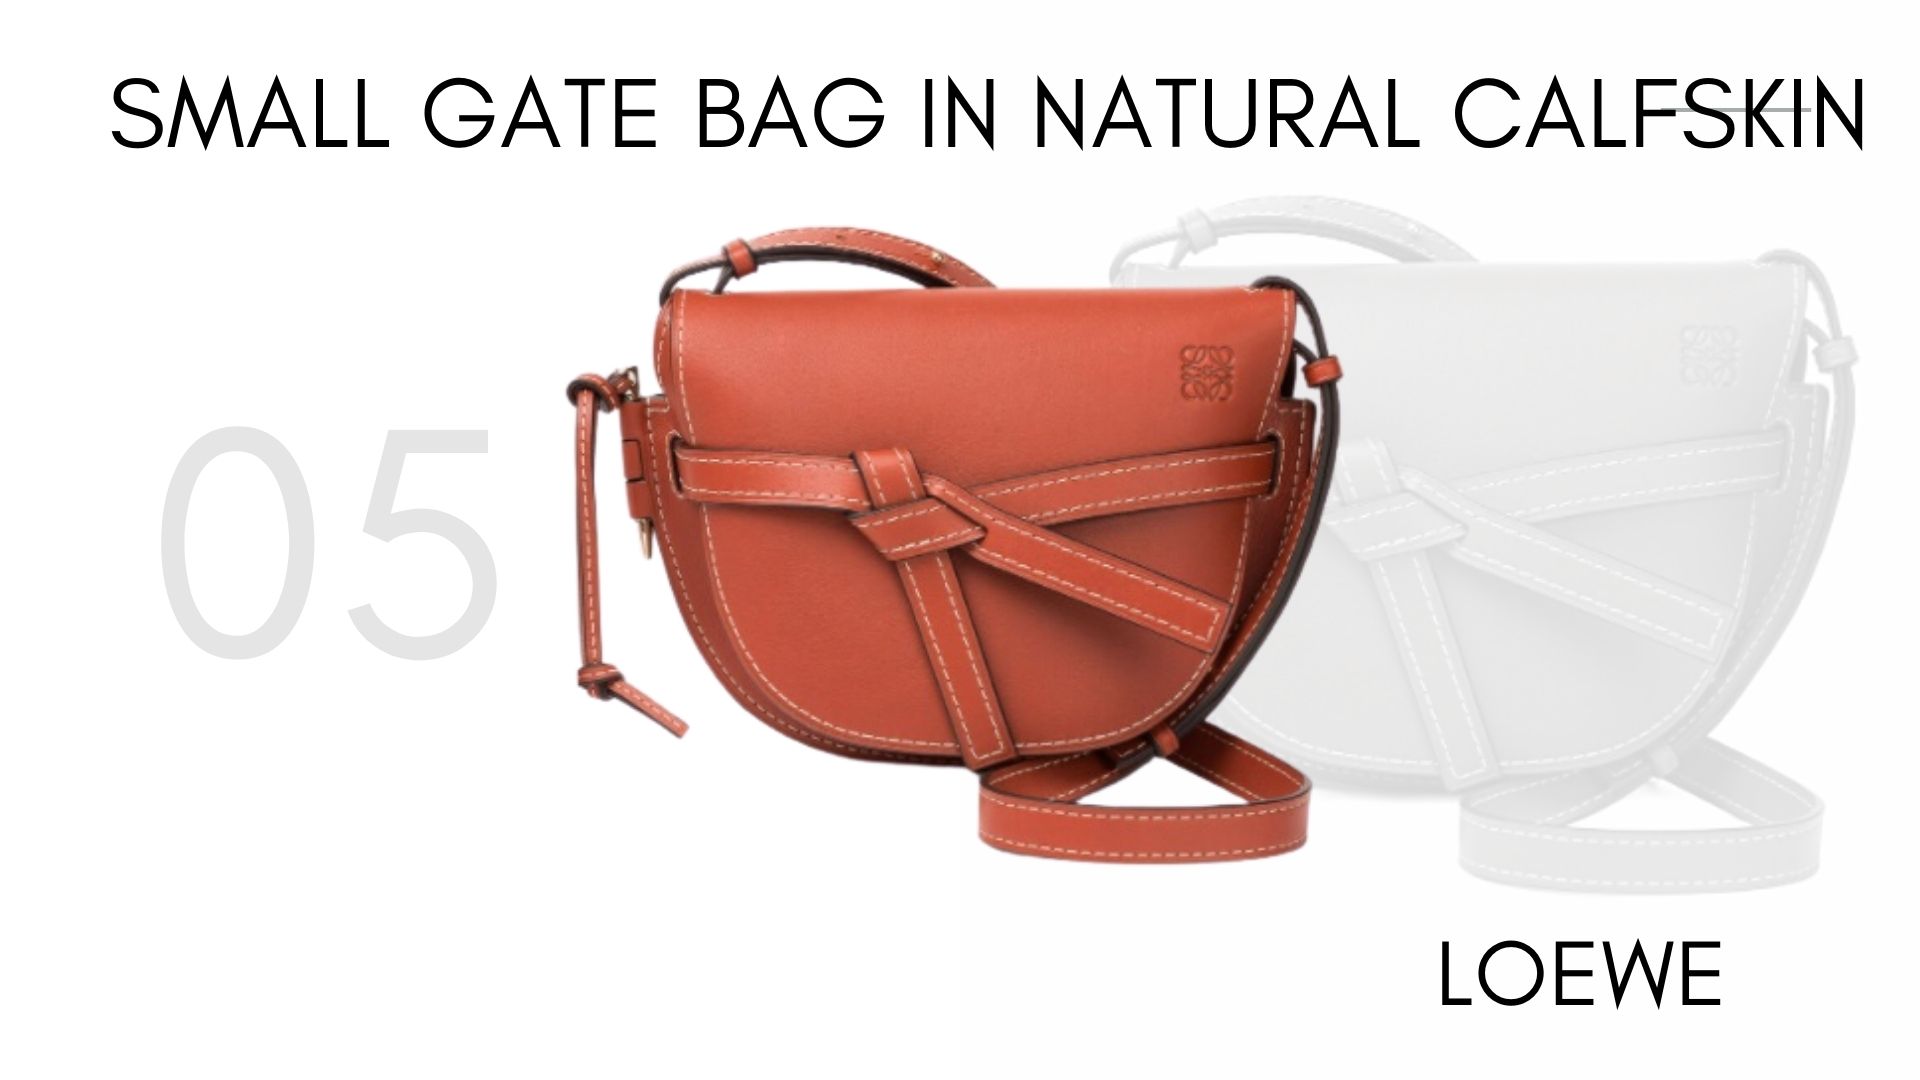 Small Gate bag in natural calfskin 